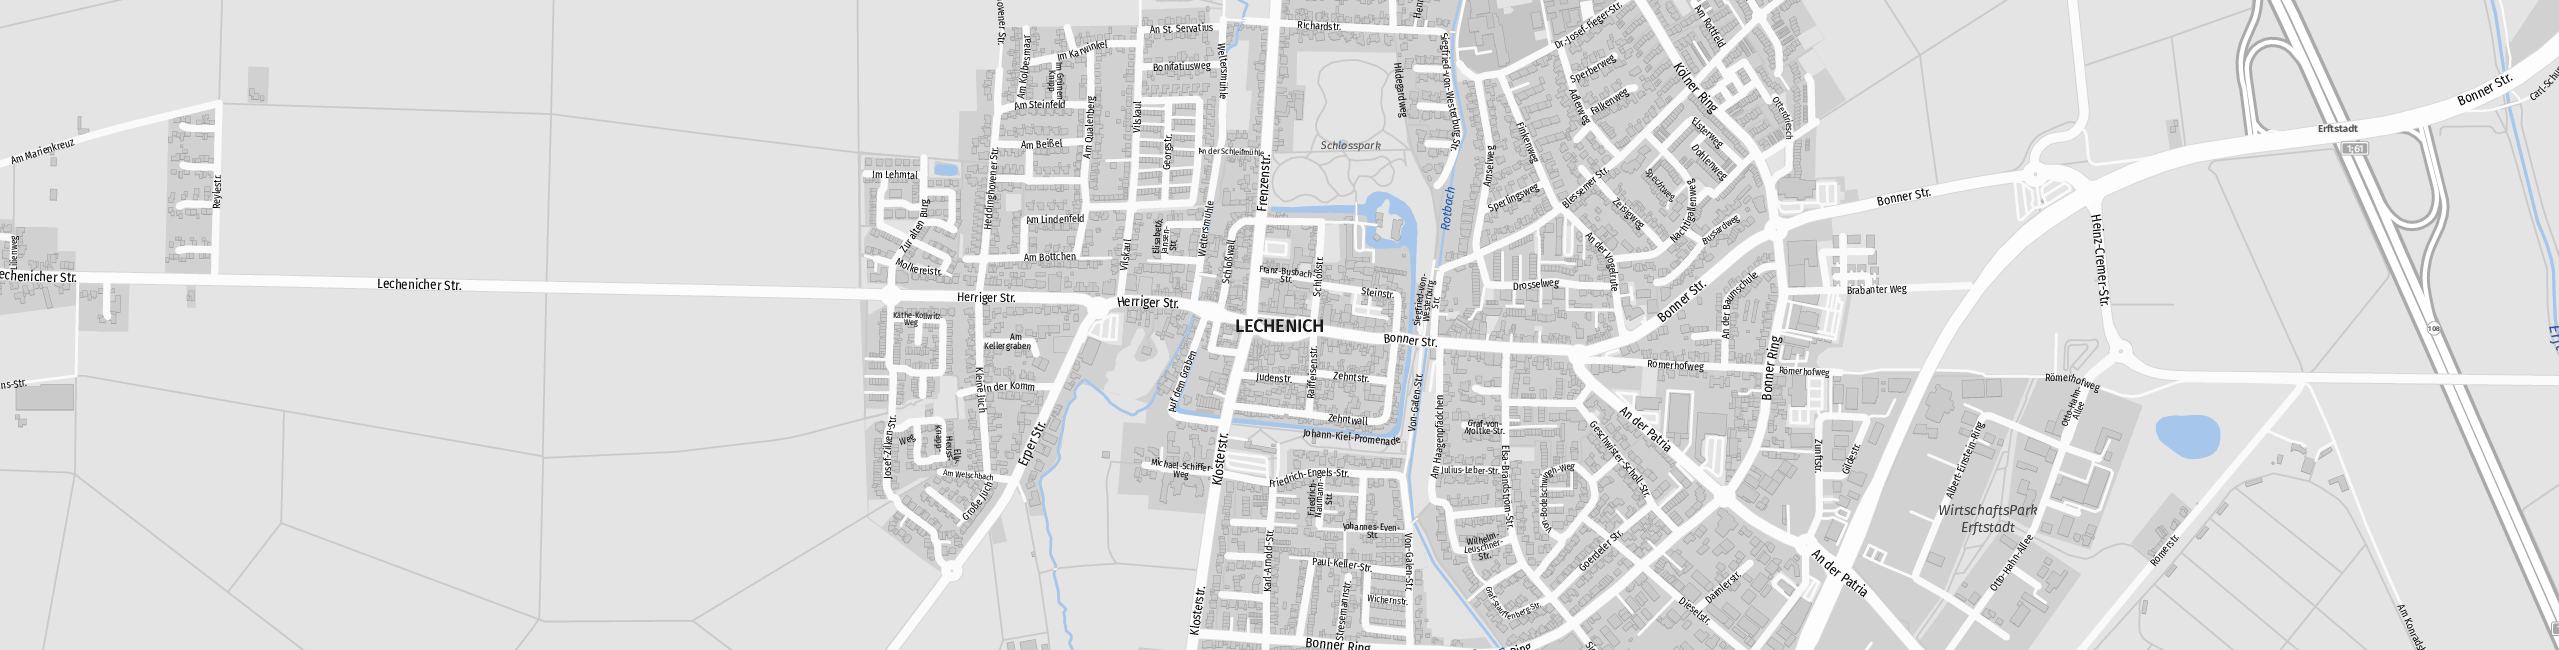 Stadtplan Lechenich zum Downloaden.